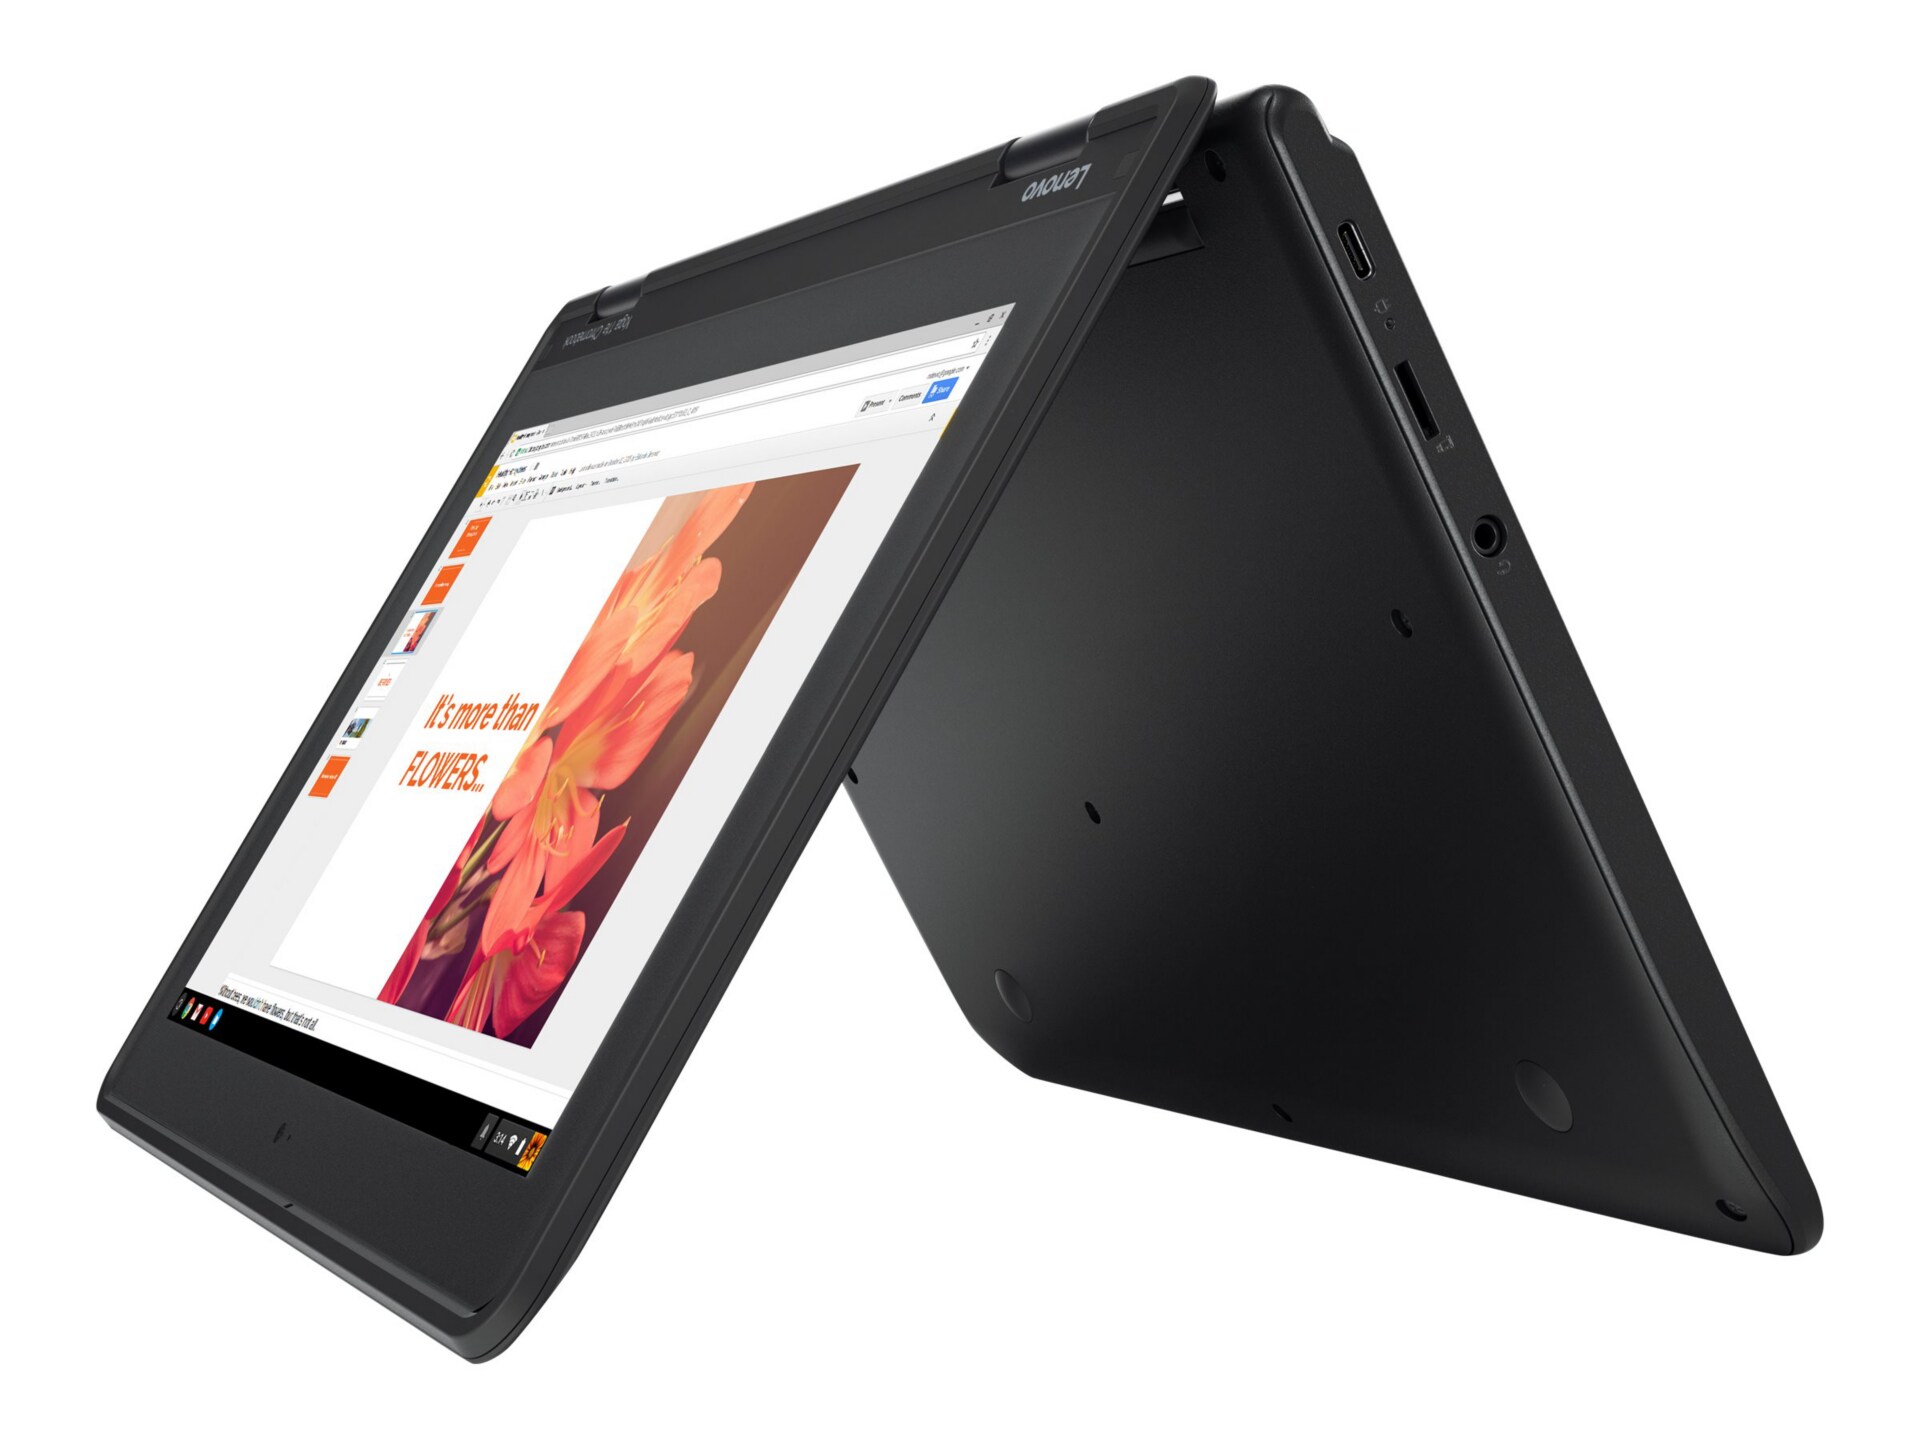 Lenovo ThinkPad Yoga 11e Chromebook (4th Gen) - 11.6" - Celeron N3450 - 4 GB RAM - 32 GB SSD